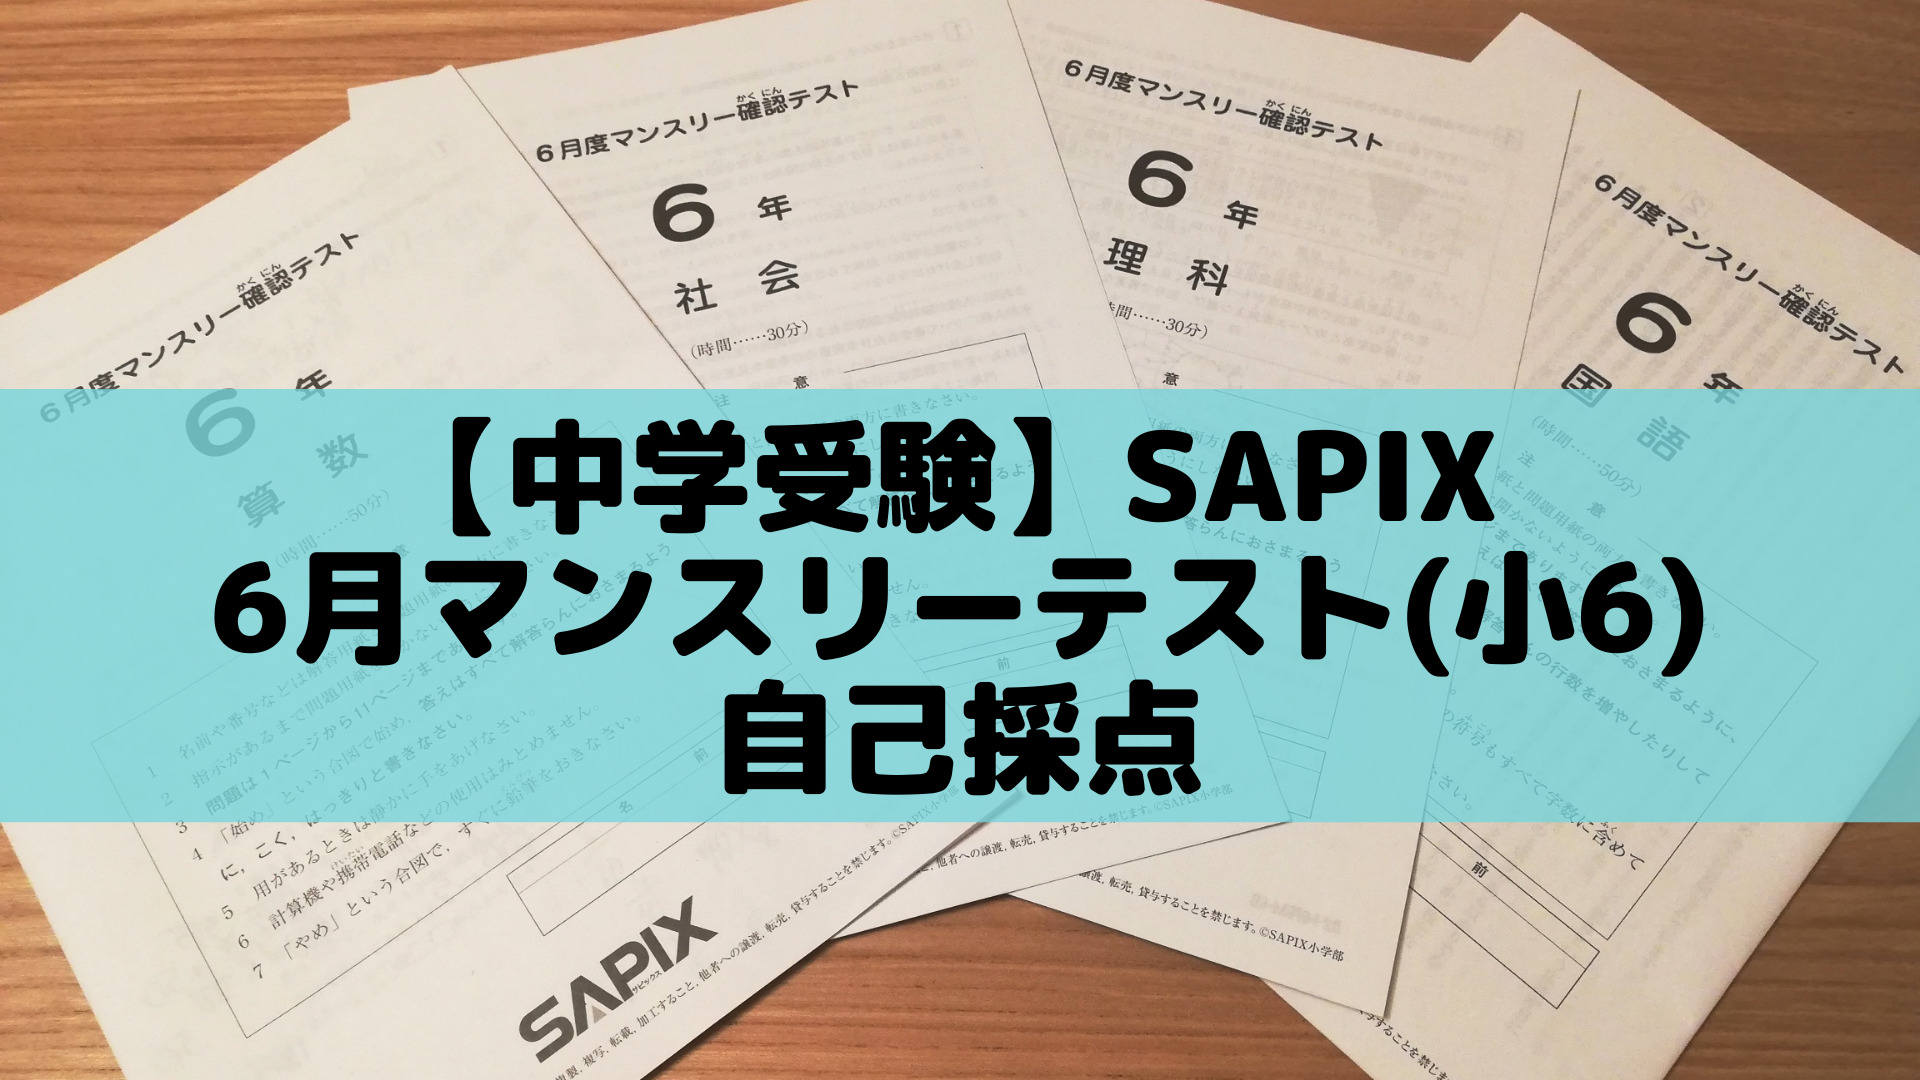 SAPIX SAPIX 4年 12月マンスリーテスト | １１月度マンスリー確認 